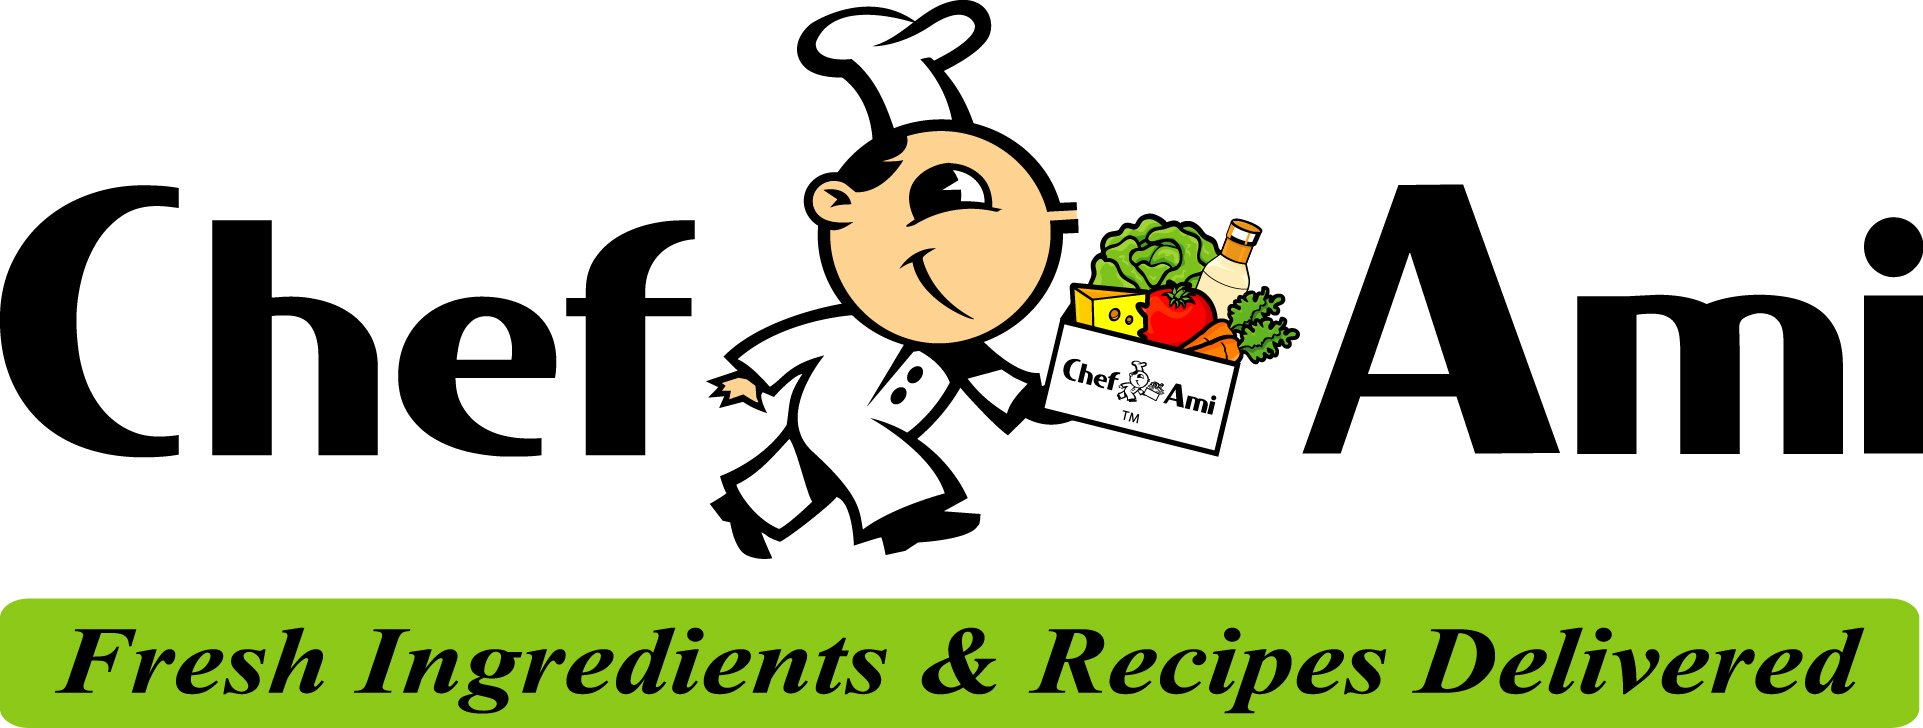 Chef Ami Tampa Bay, LLC